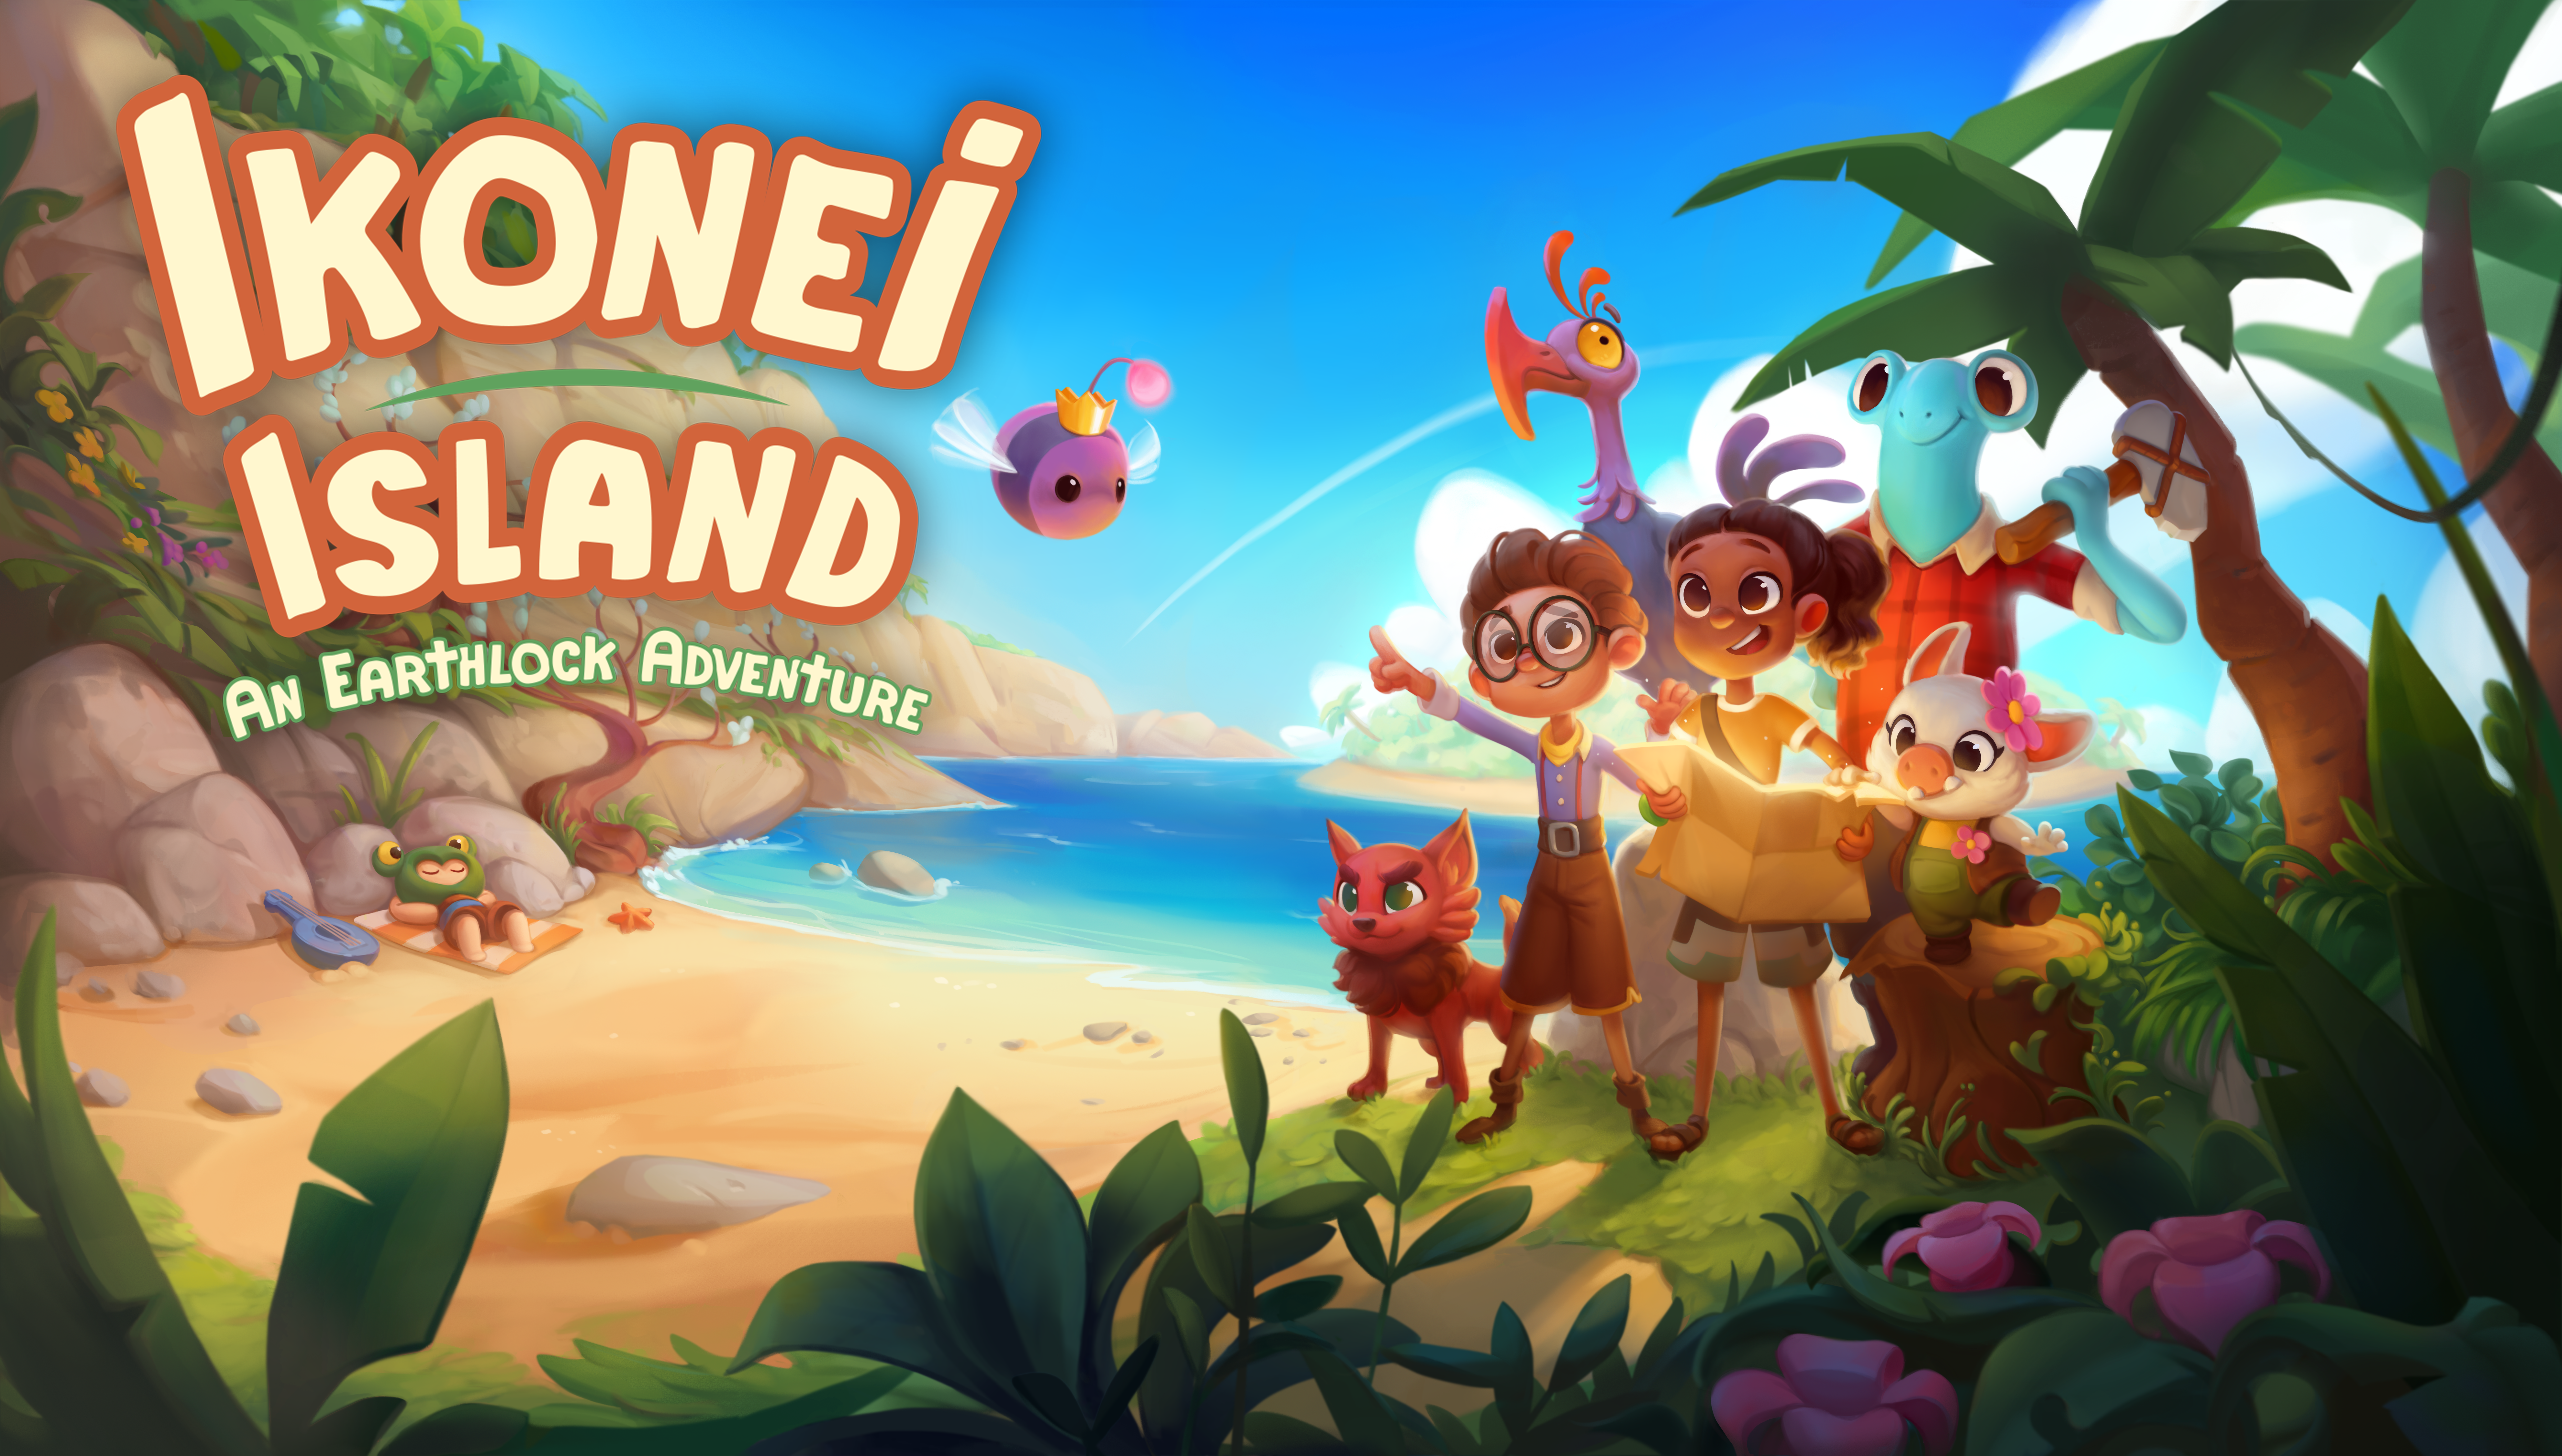 Ikonei Island: An Earthlock adventure Nintendo Switch cover art